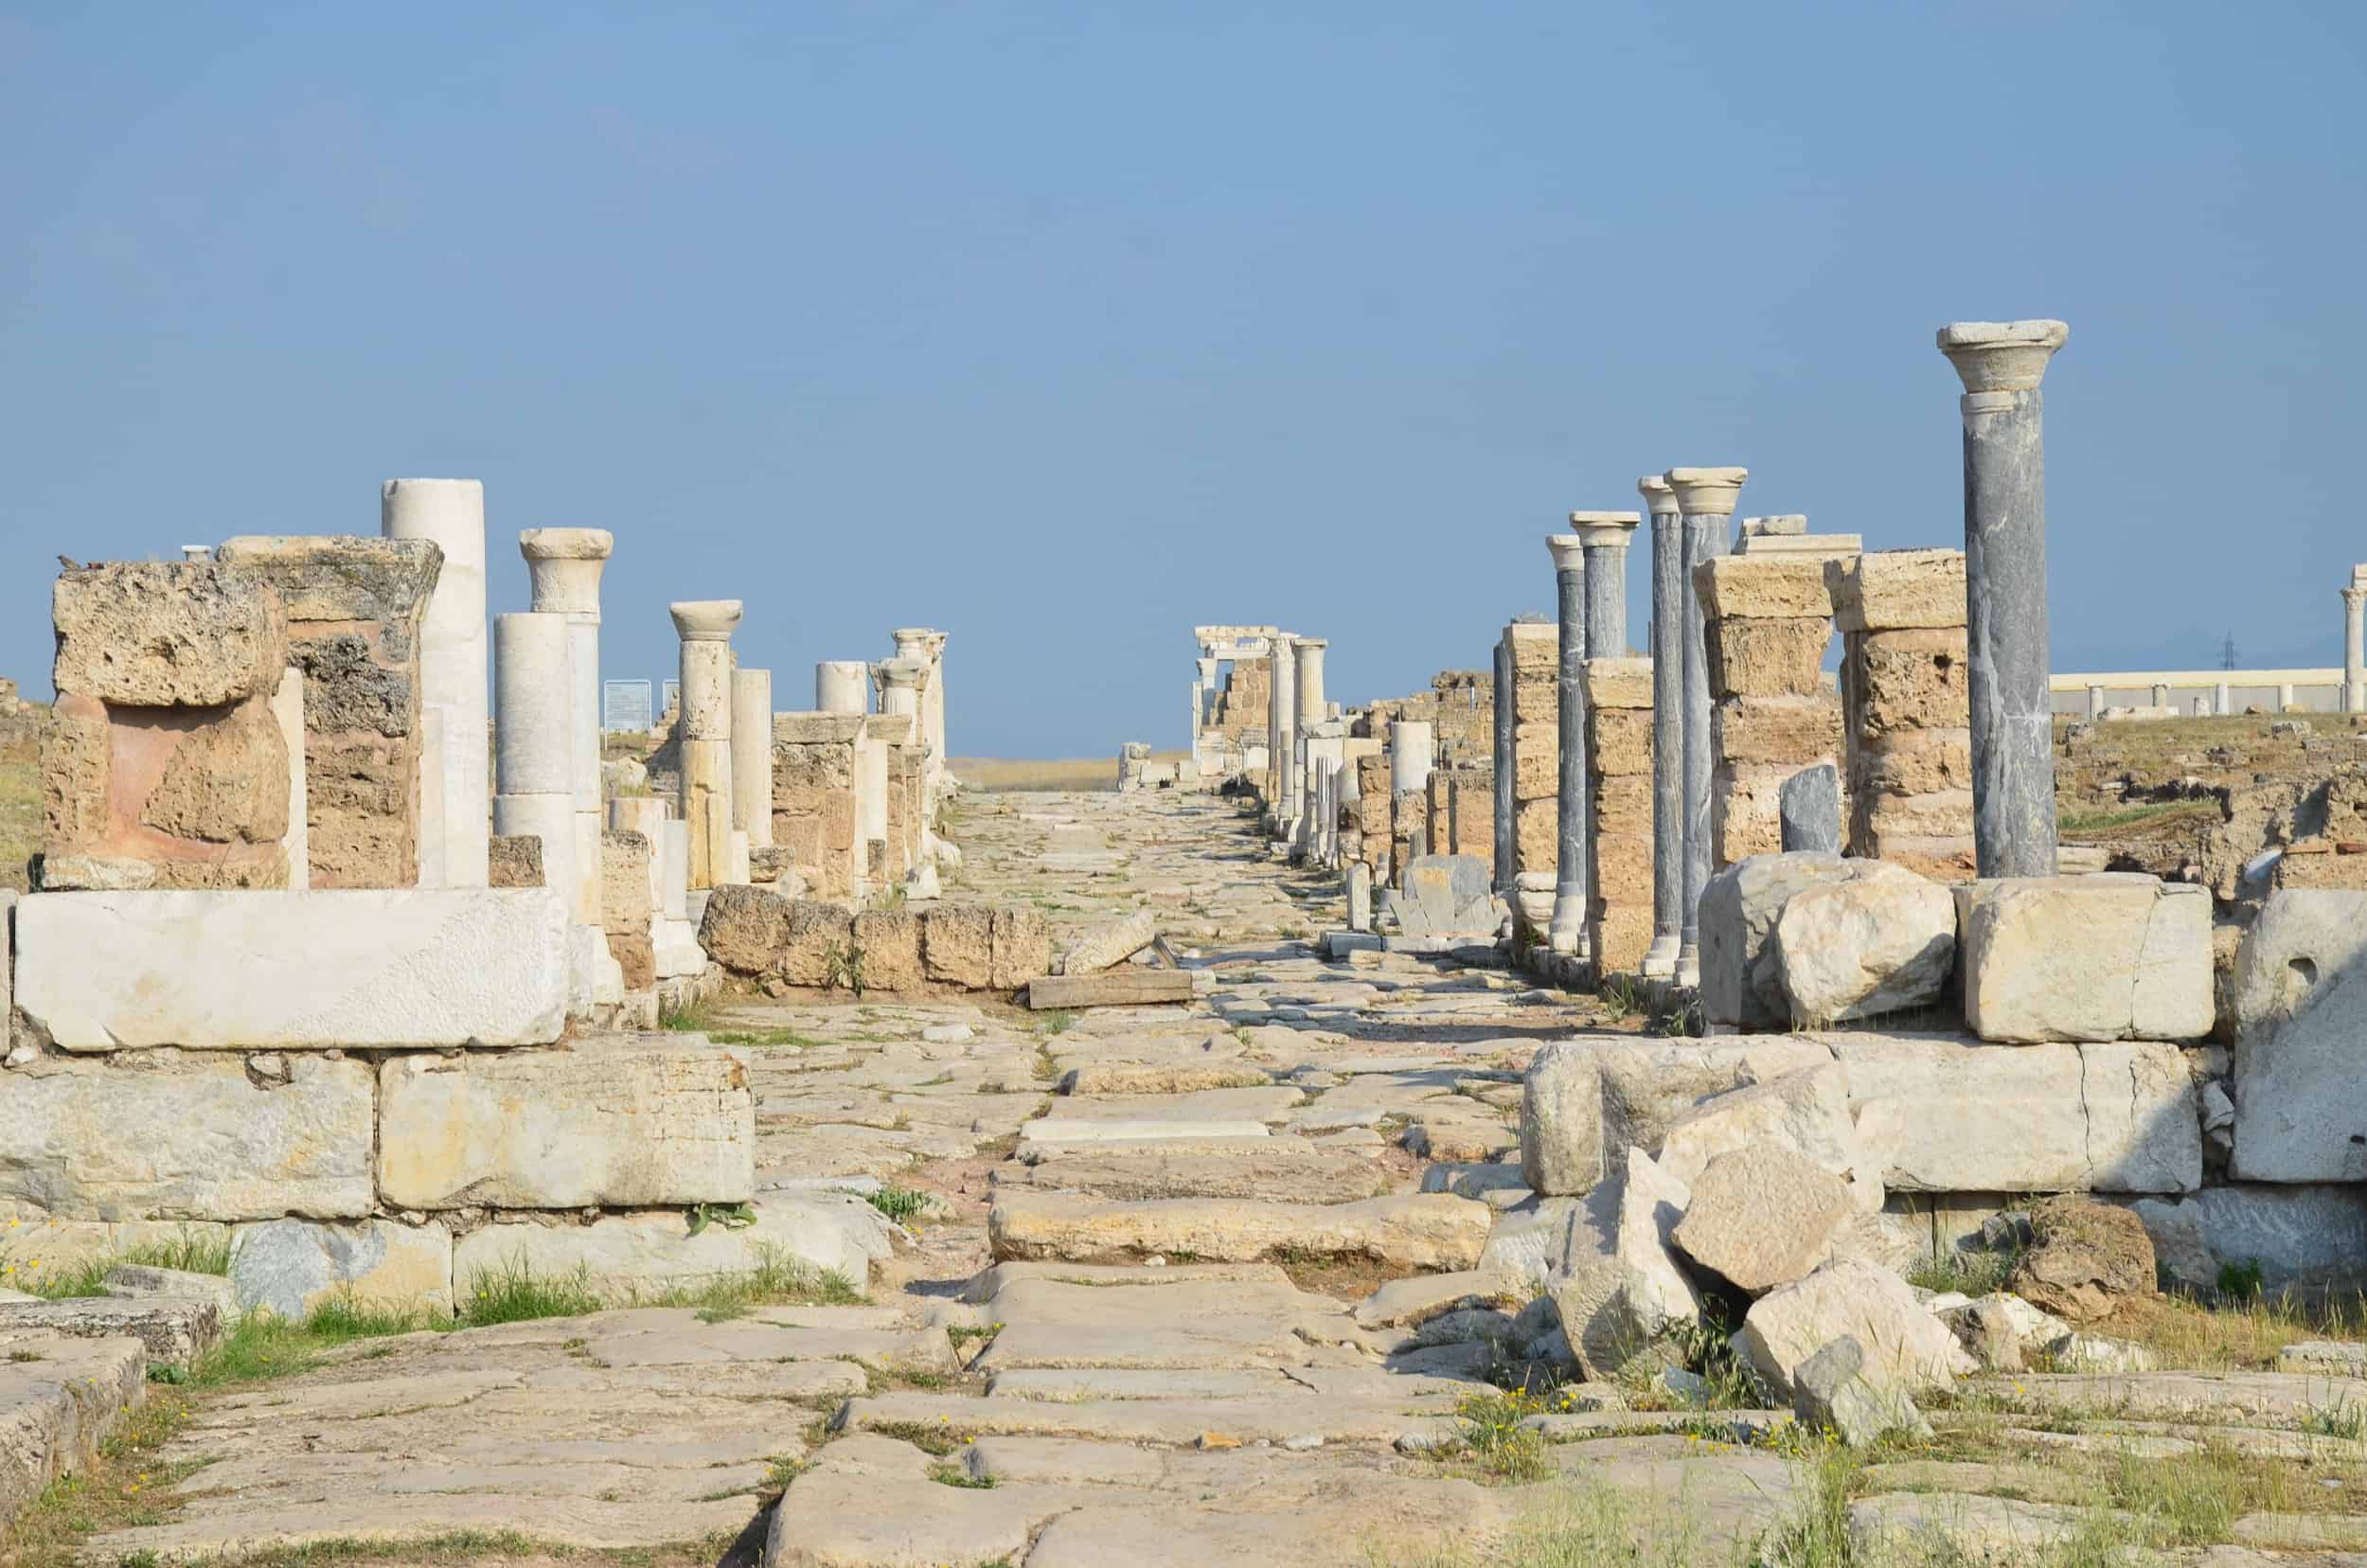 Looking west down Syria Street in Laodicea